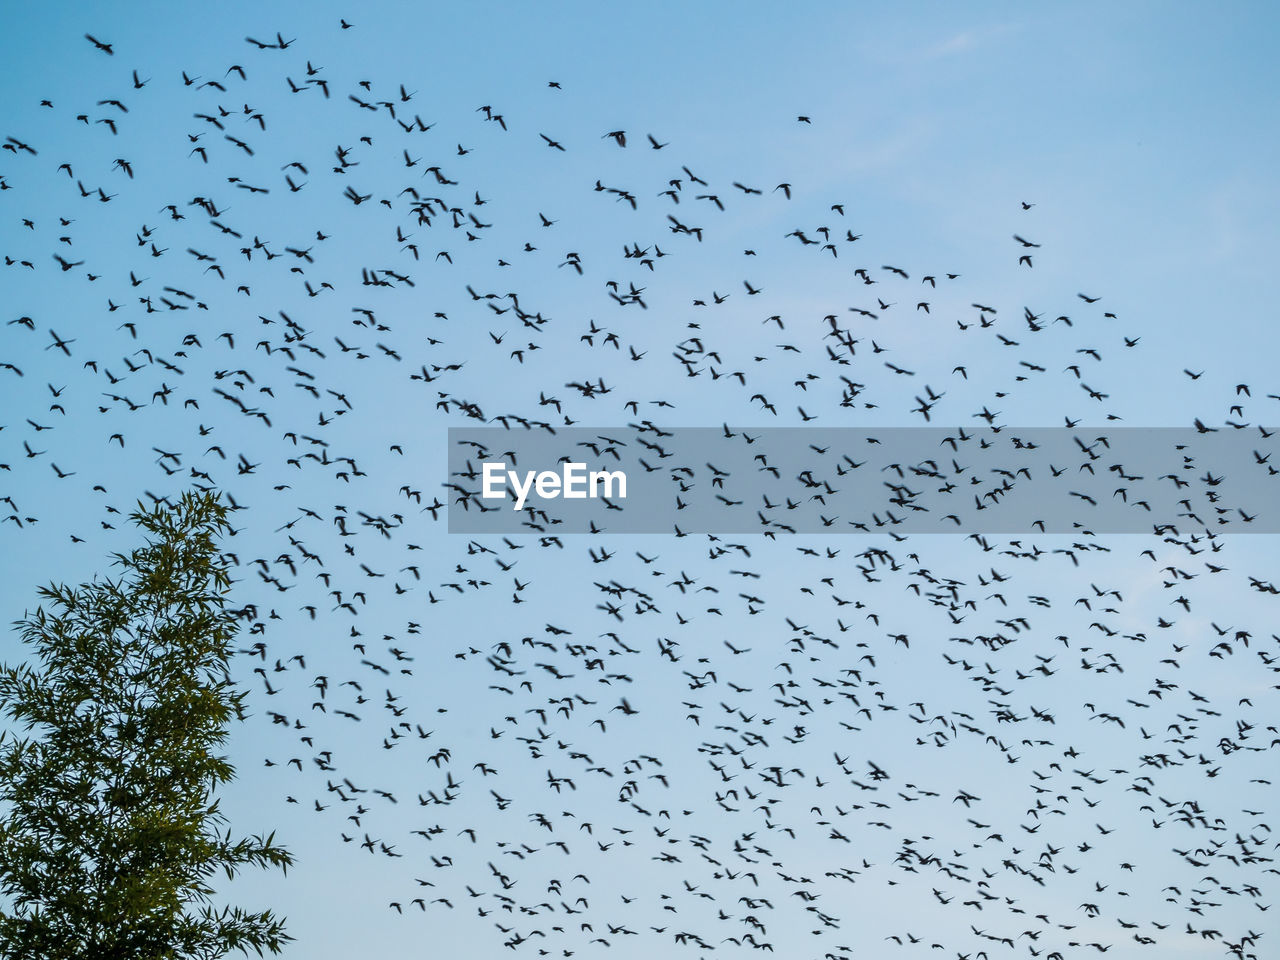 FLOCK OF BIRDS FLYING IN THE SKY